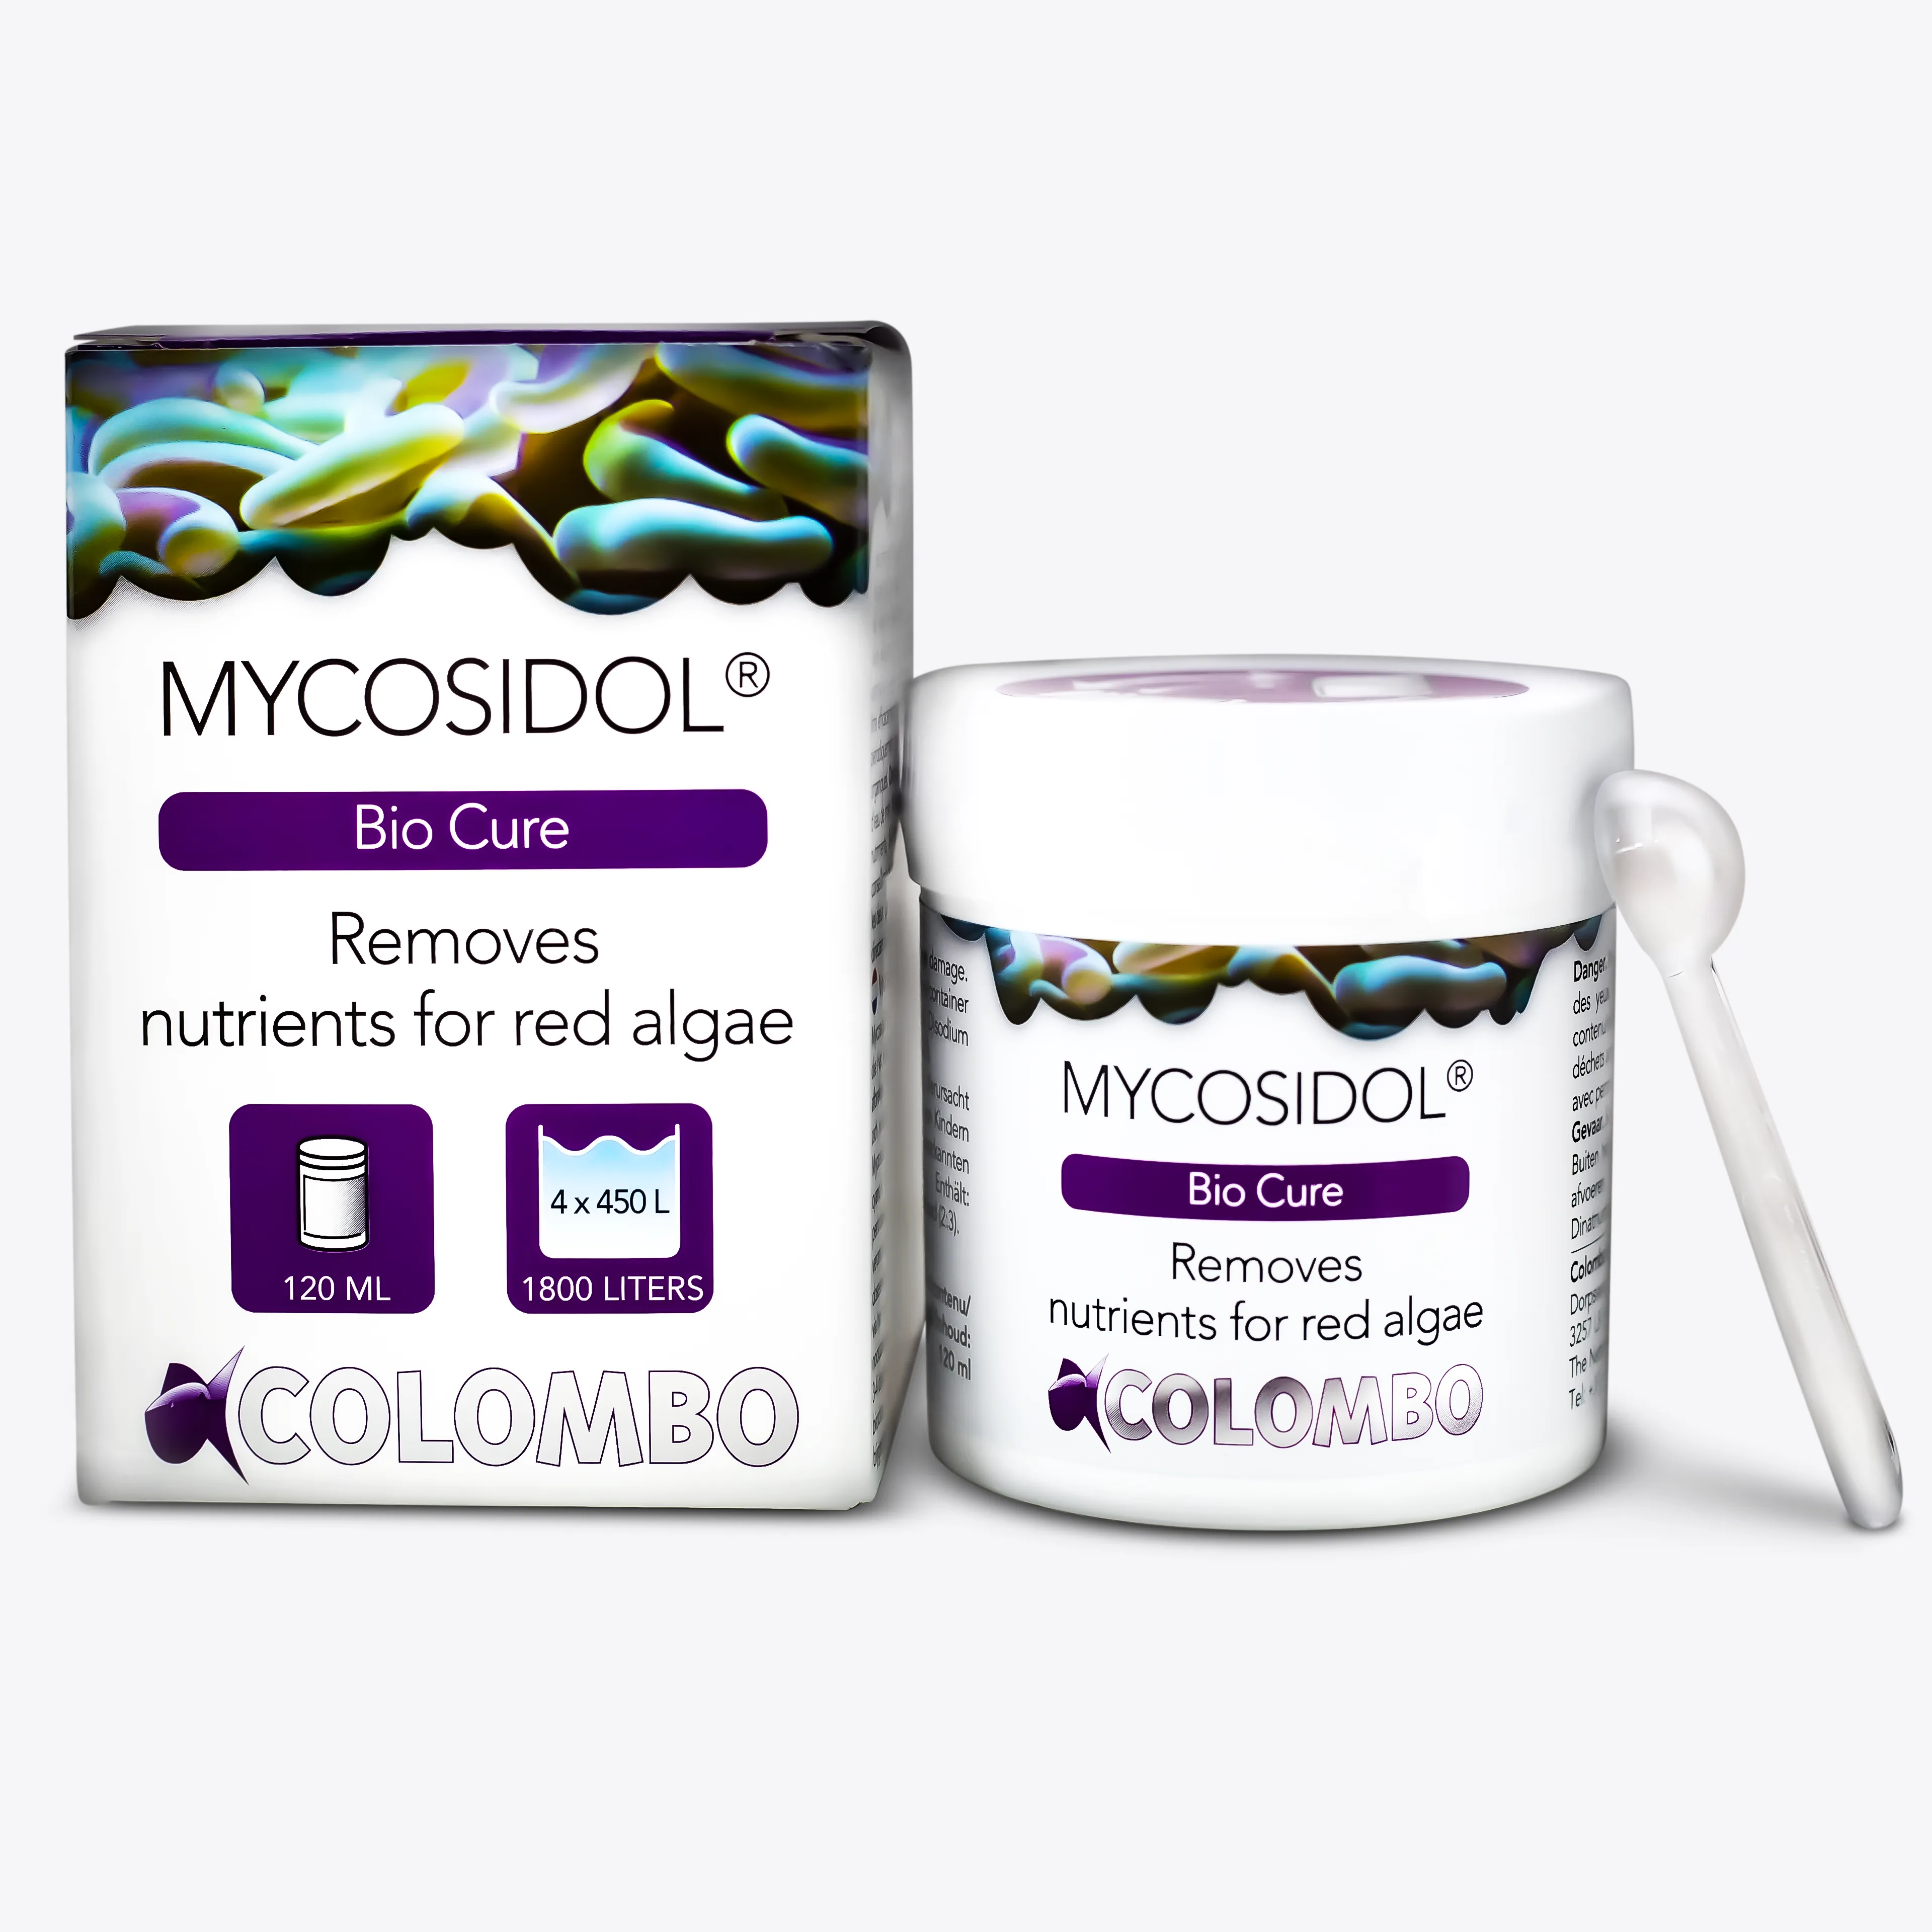 N5060600 Colombo Mycosidol Bio Cure 120 ml 6G3A5233